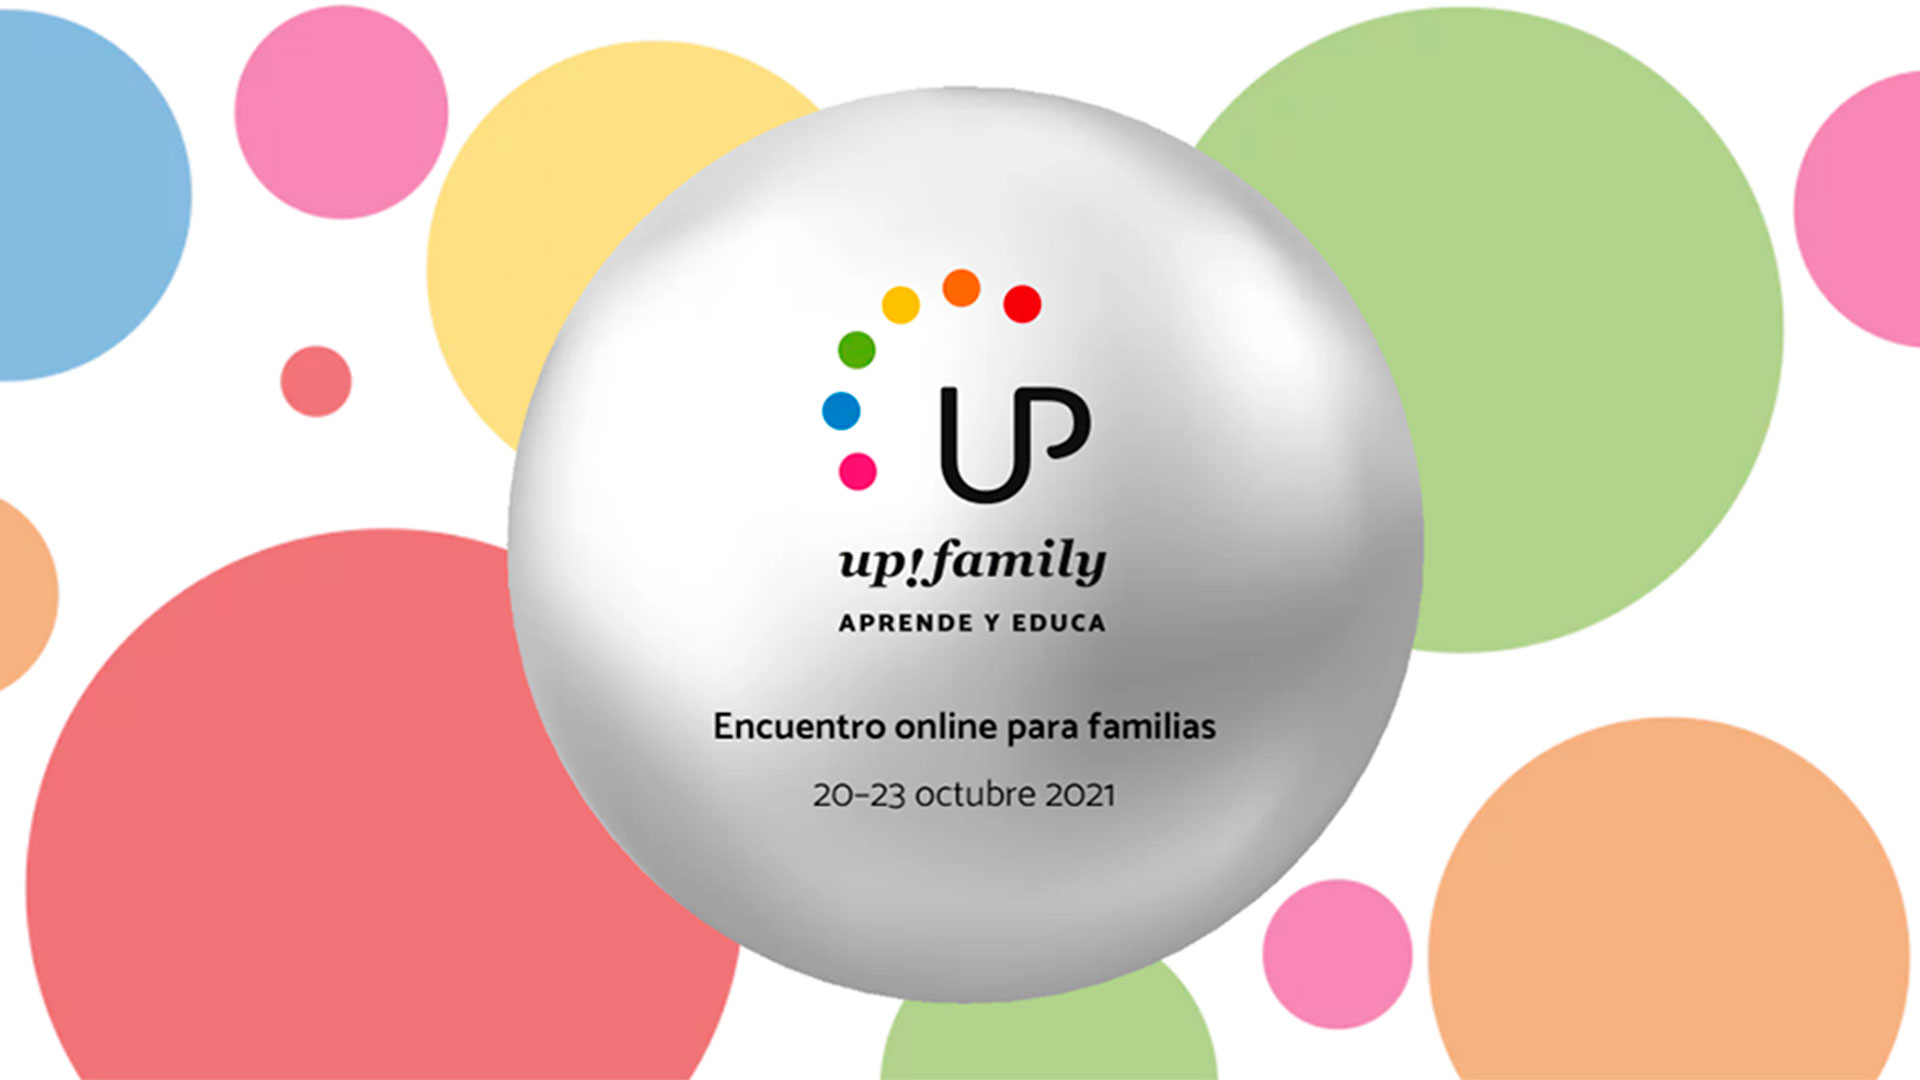 Up!family «Aprende y educa»